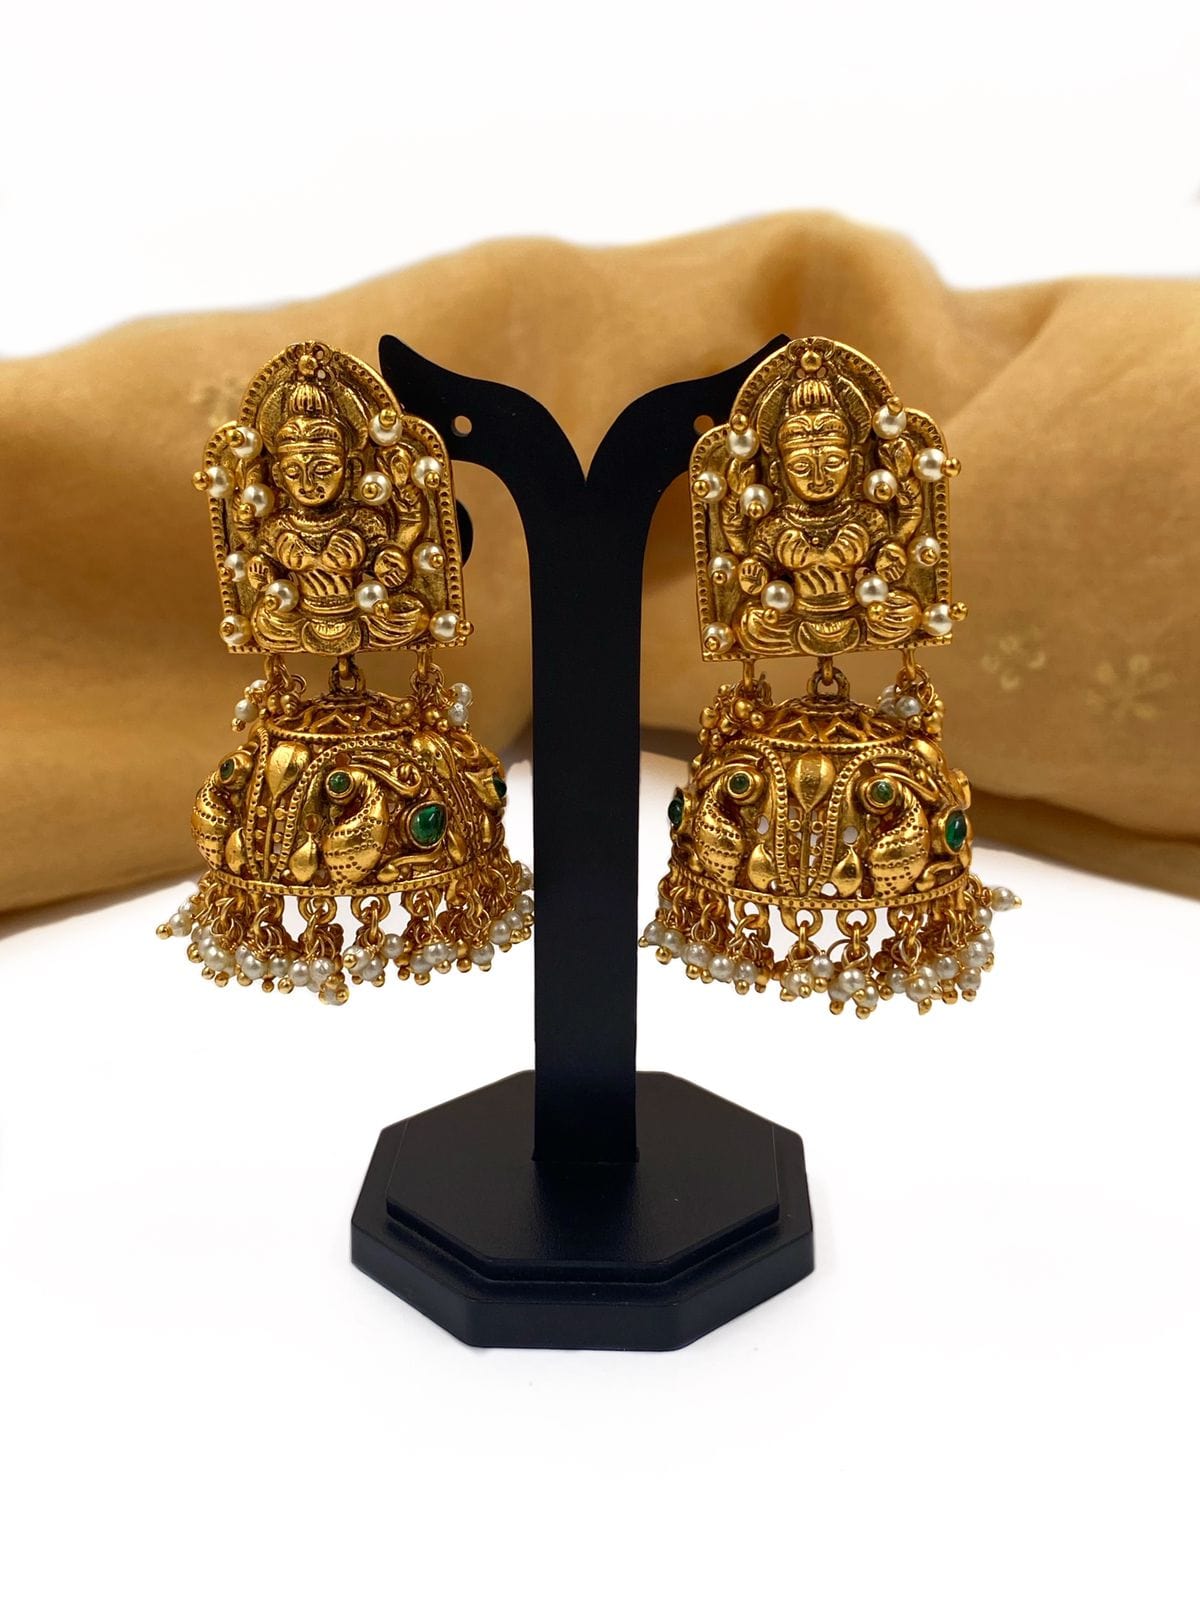 Buy Most Popular Big Long Jhumki Indian Traditional Black Online in India   Etsy  Jhumki Indian earrings Antique earrings